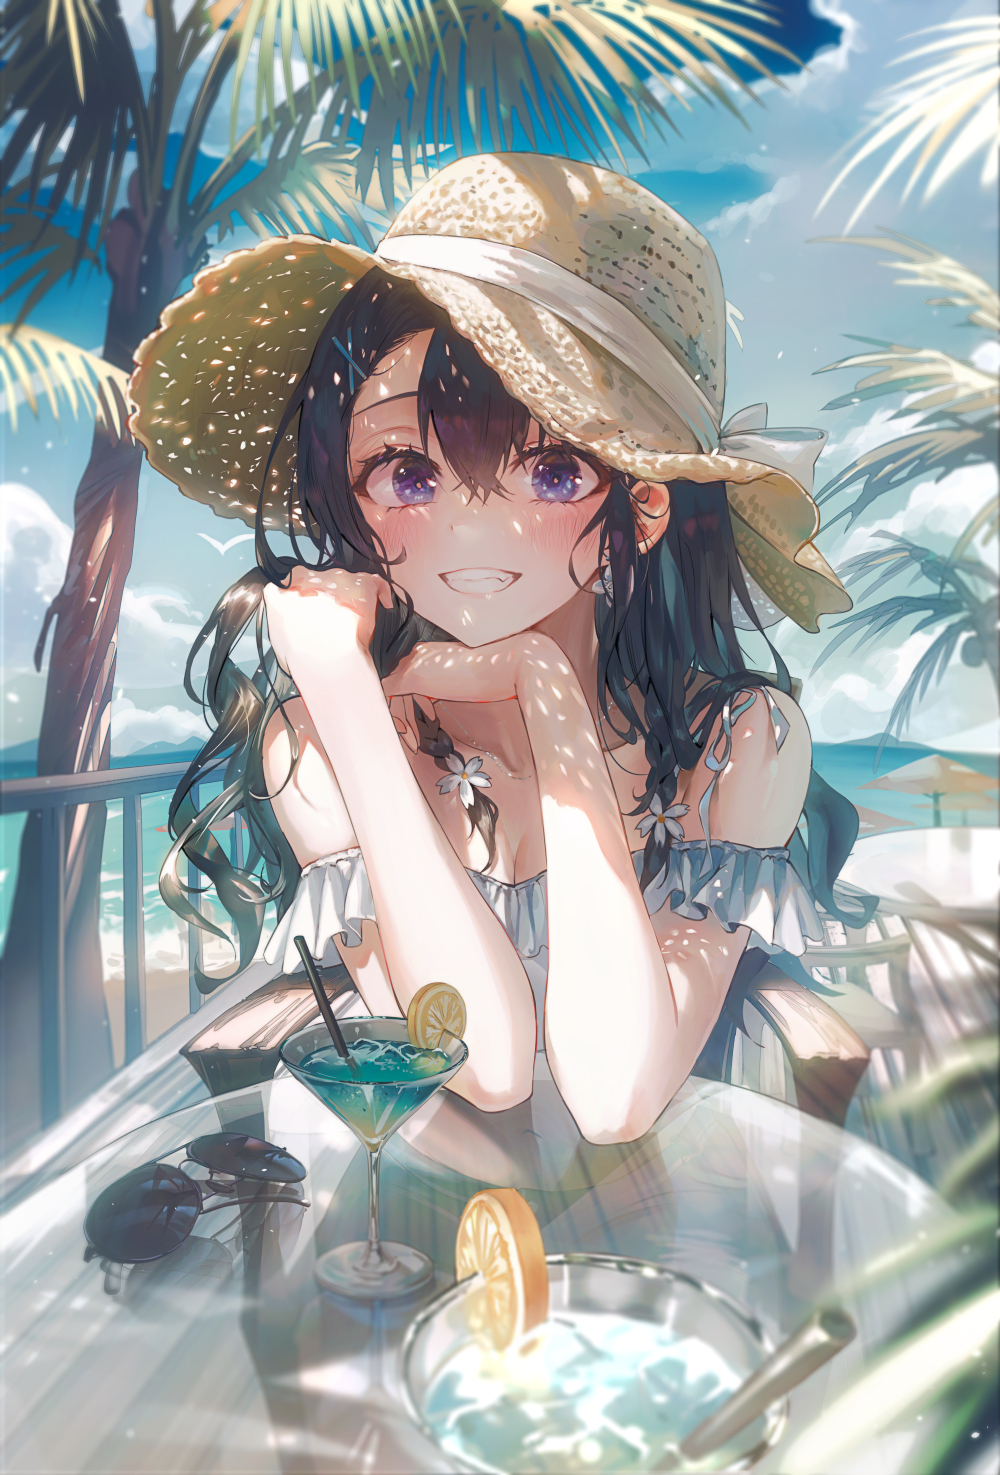 Anime 1000x1475 anime anime girls straw hat hat drink beach sun dress smiling artwork Tokkyu (artista) cocktails palm trees sunglasses black hair purple eyes cleavage